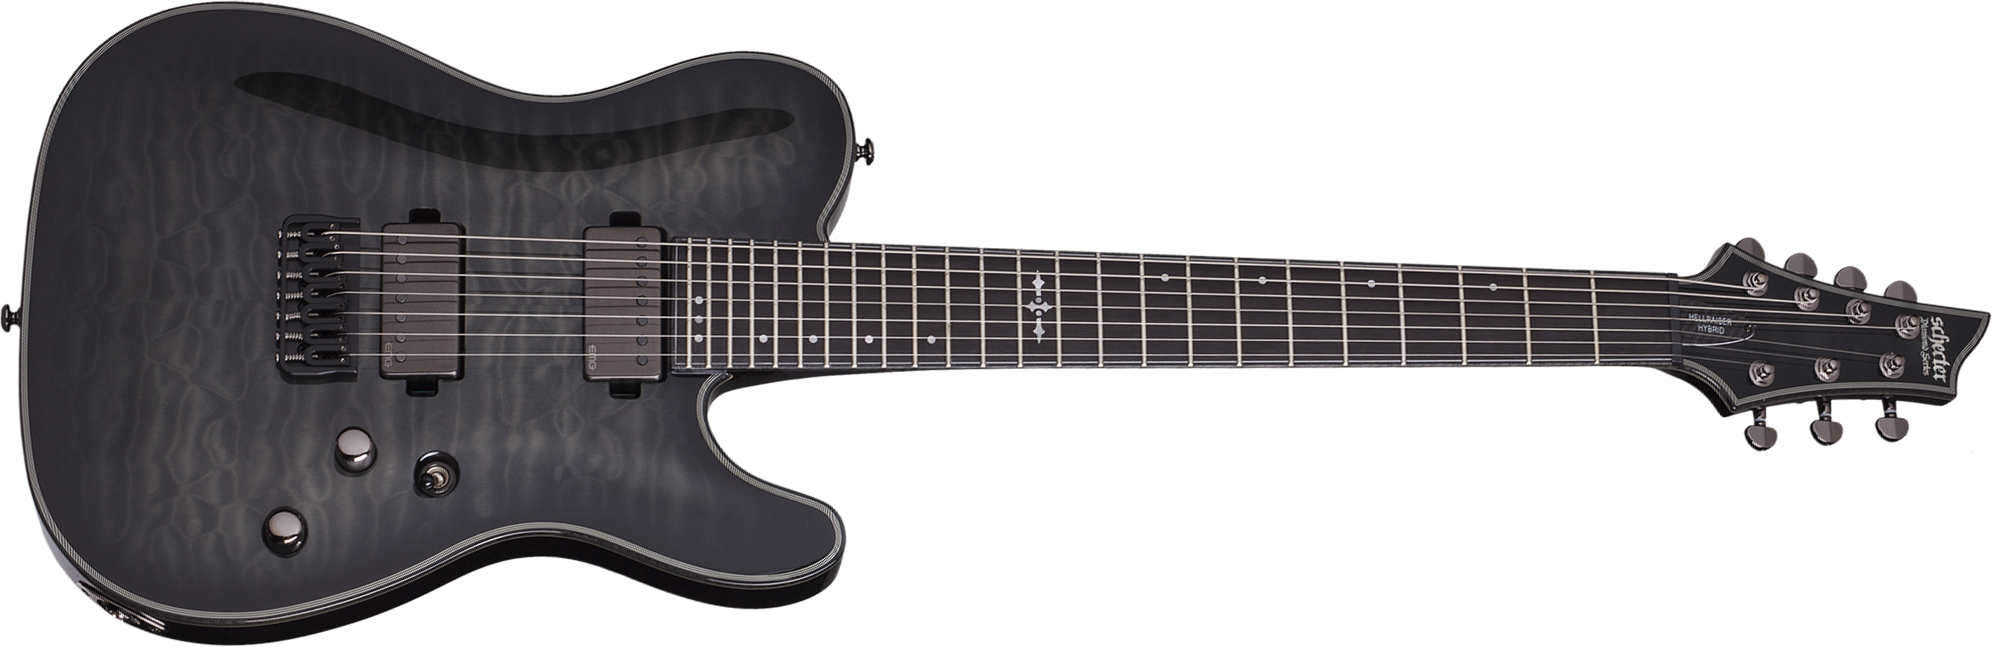 Schecter Pt-7 Hellraiser Hybrid 7c Hh Emg Ht Eb - Transp. Black Burst - 7 string electric guitar - Main picture